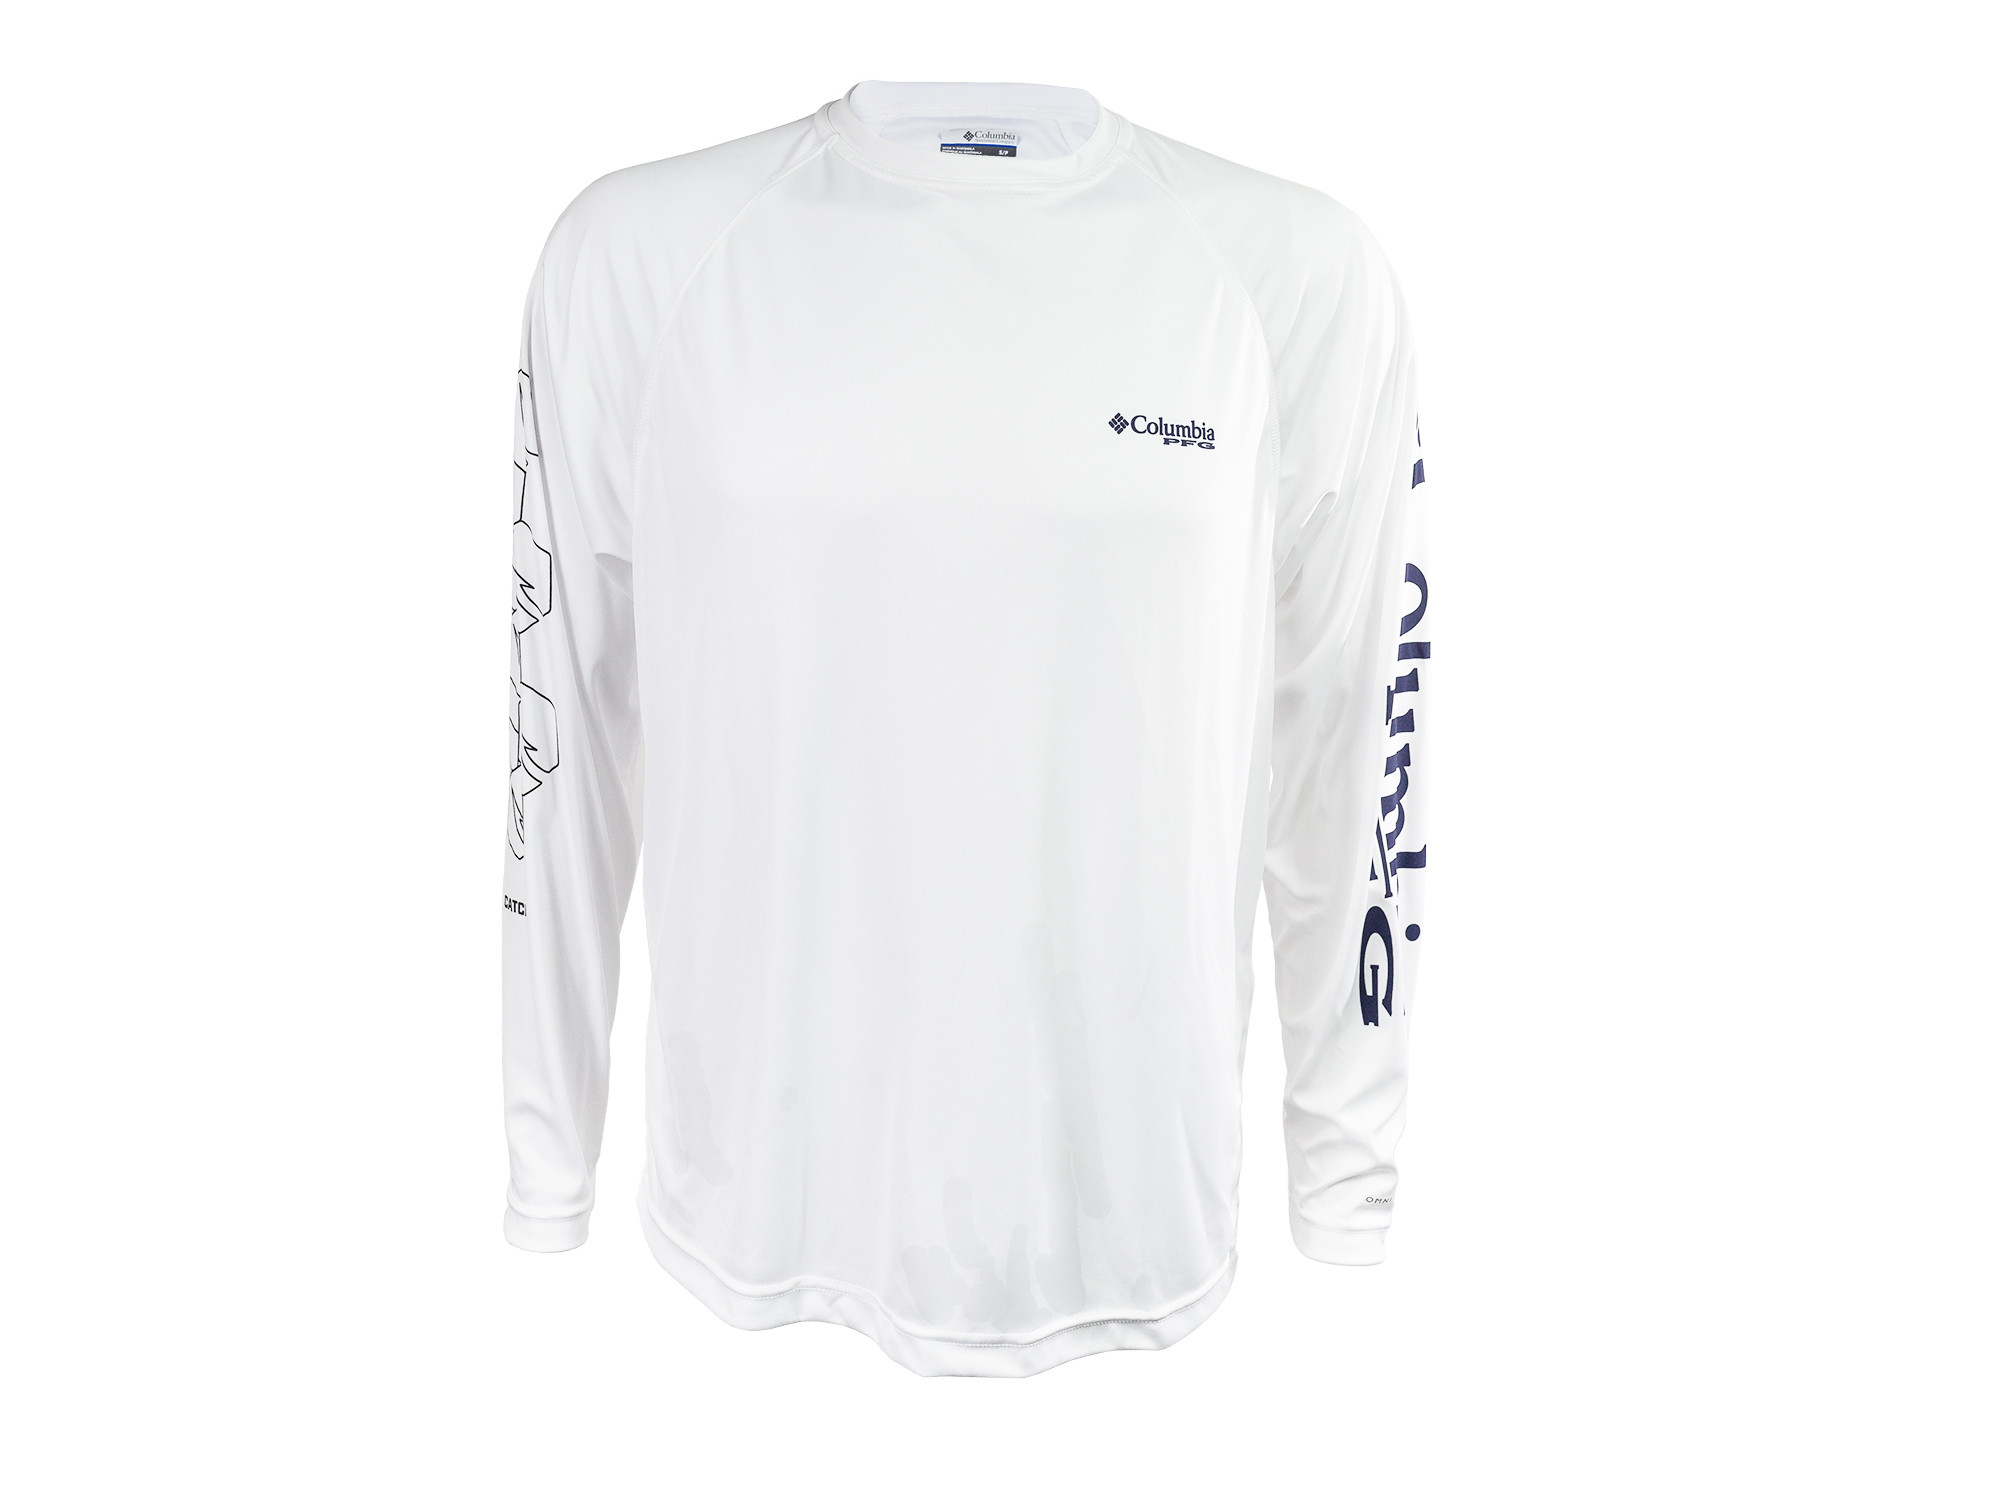 Columbia + Catch Co. PFG Long Sleeve Performance Shirt